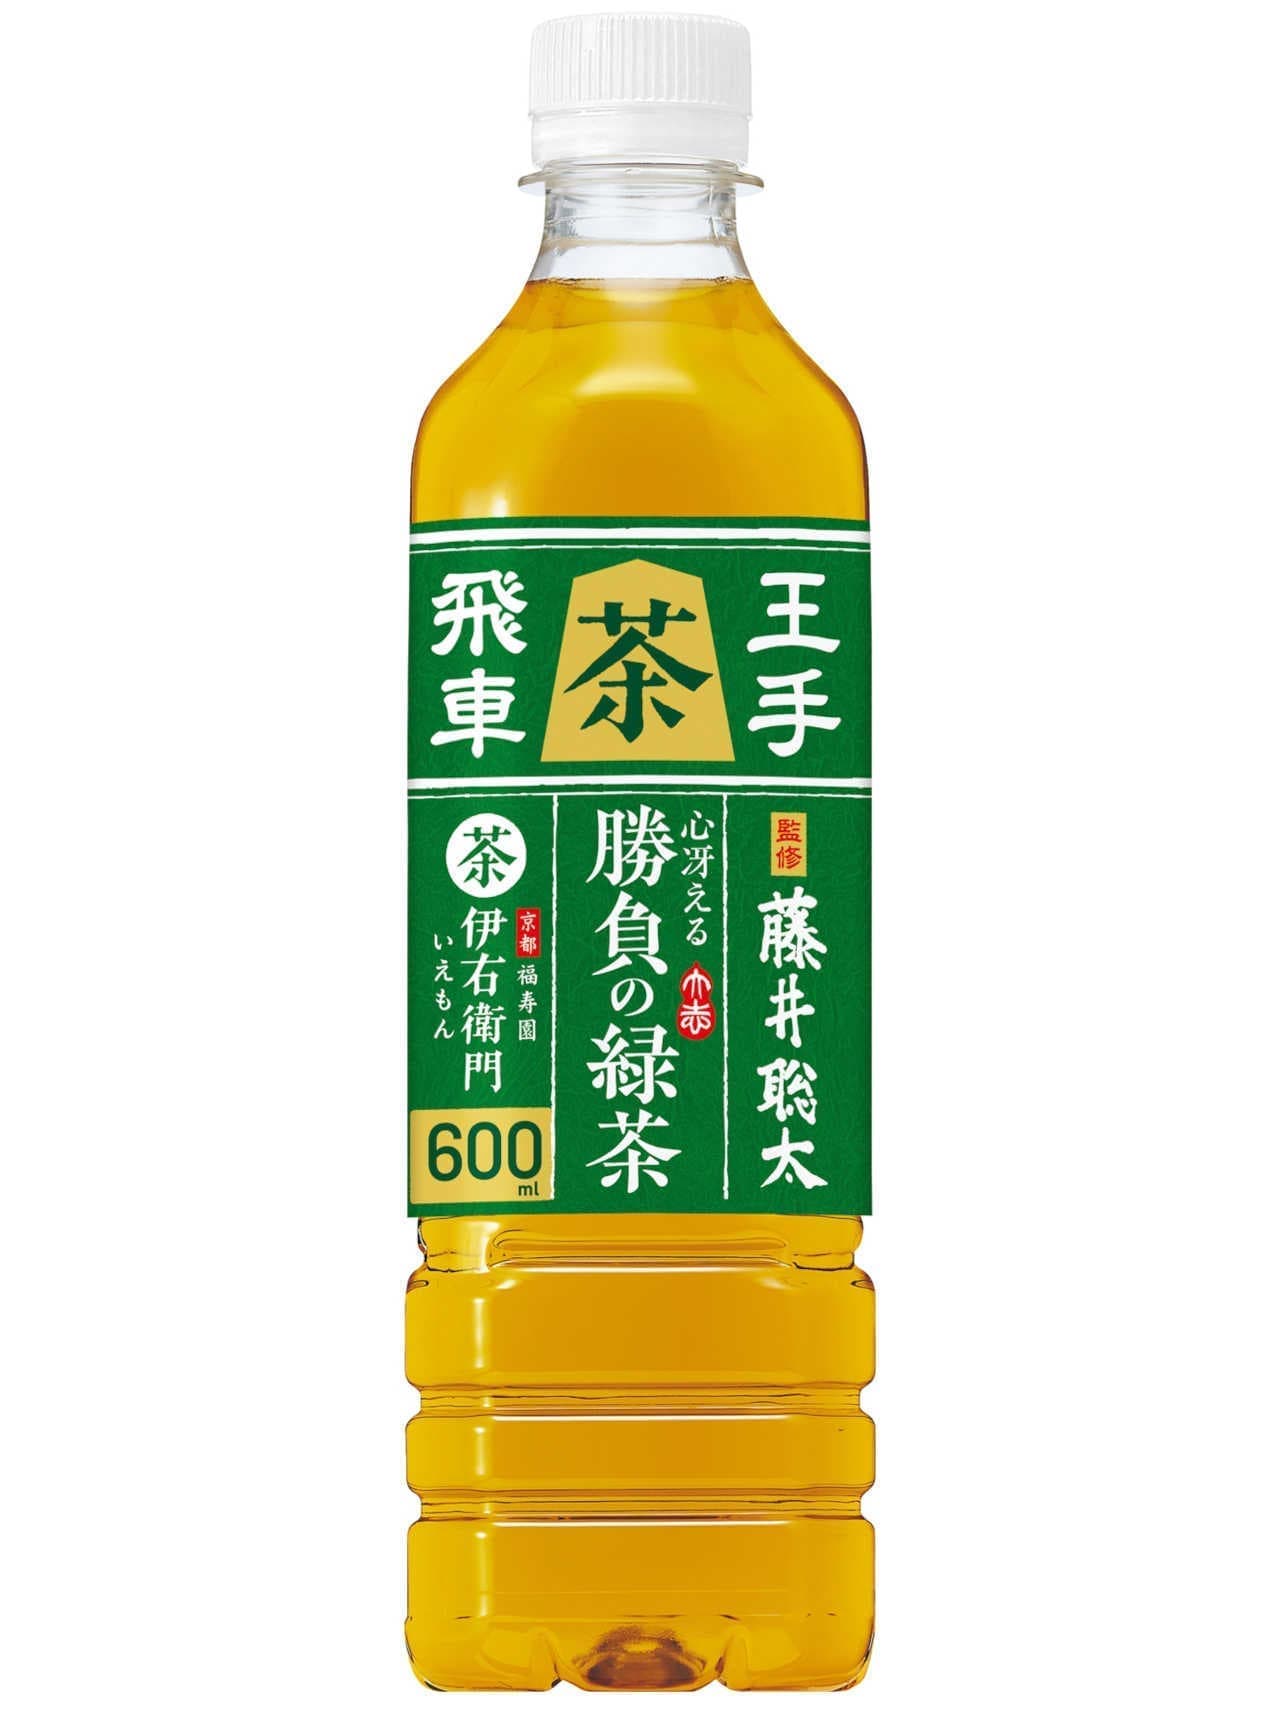 Iyemon Mind Saireru Katsudo no Green Tea, a green tea beverage supervised by Sota Fujii.